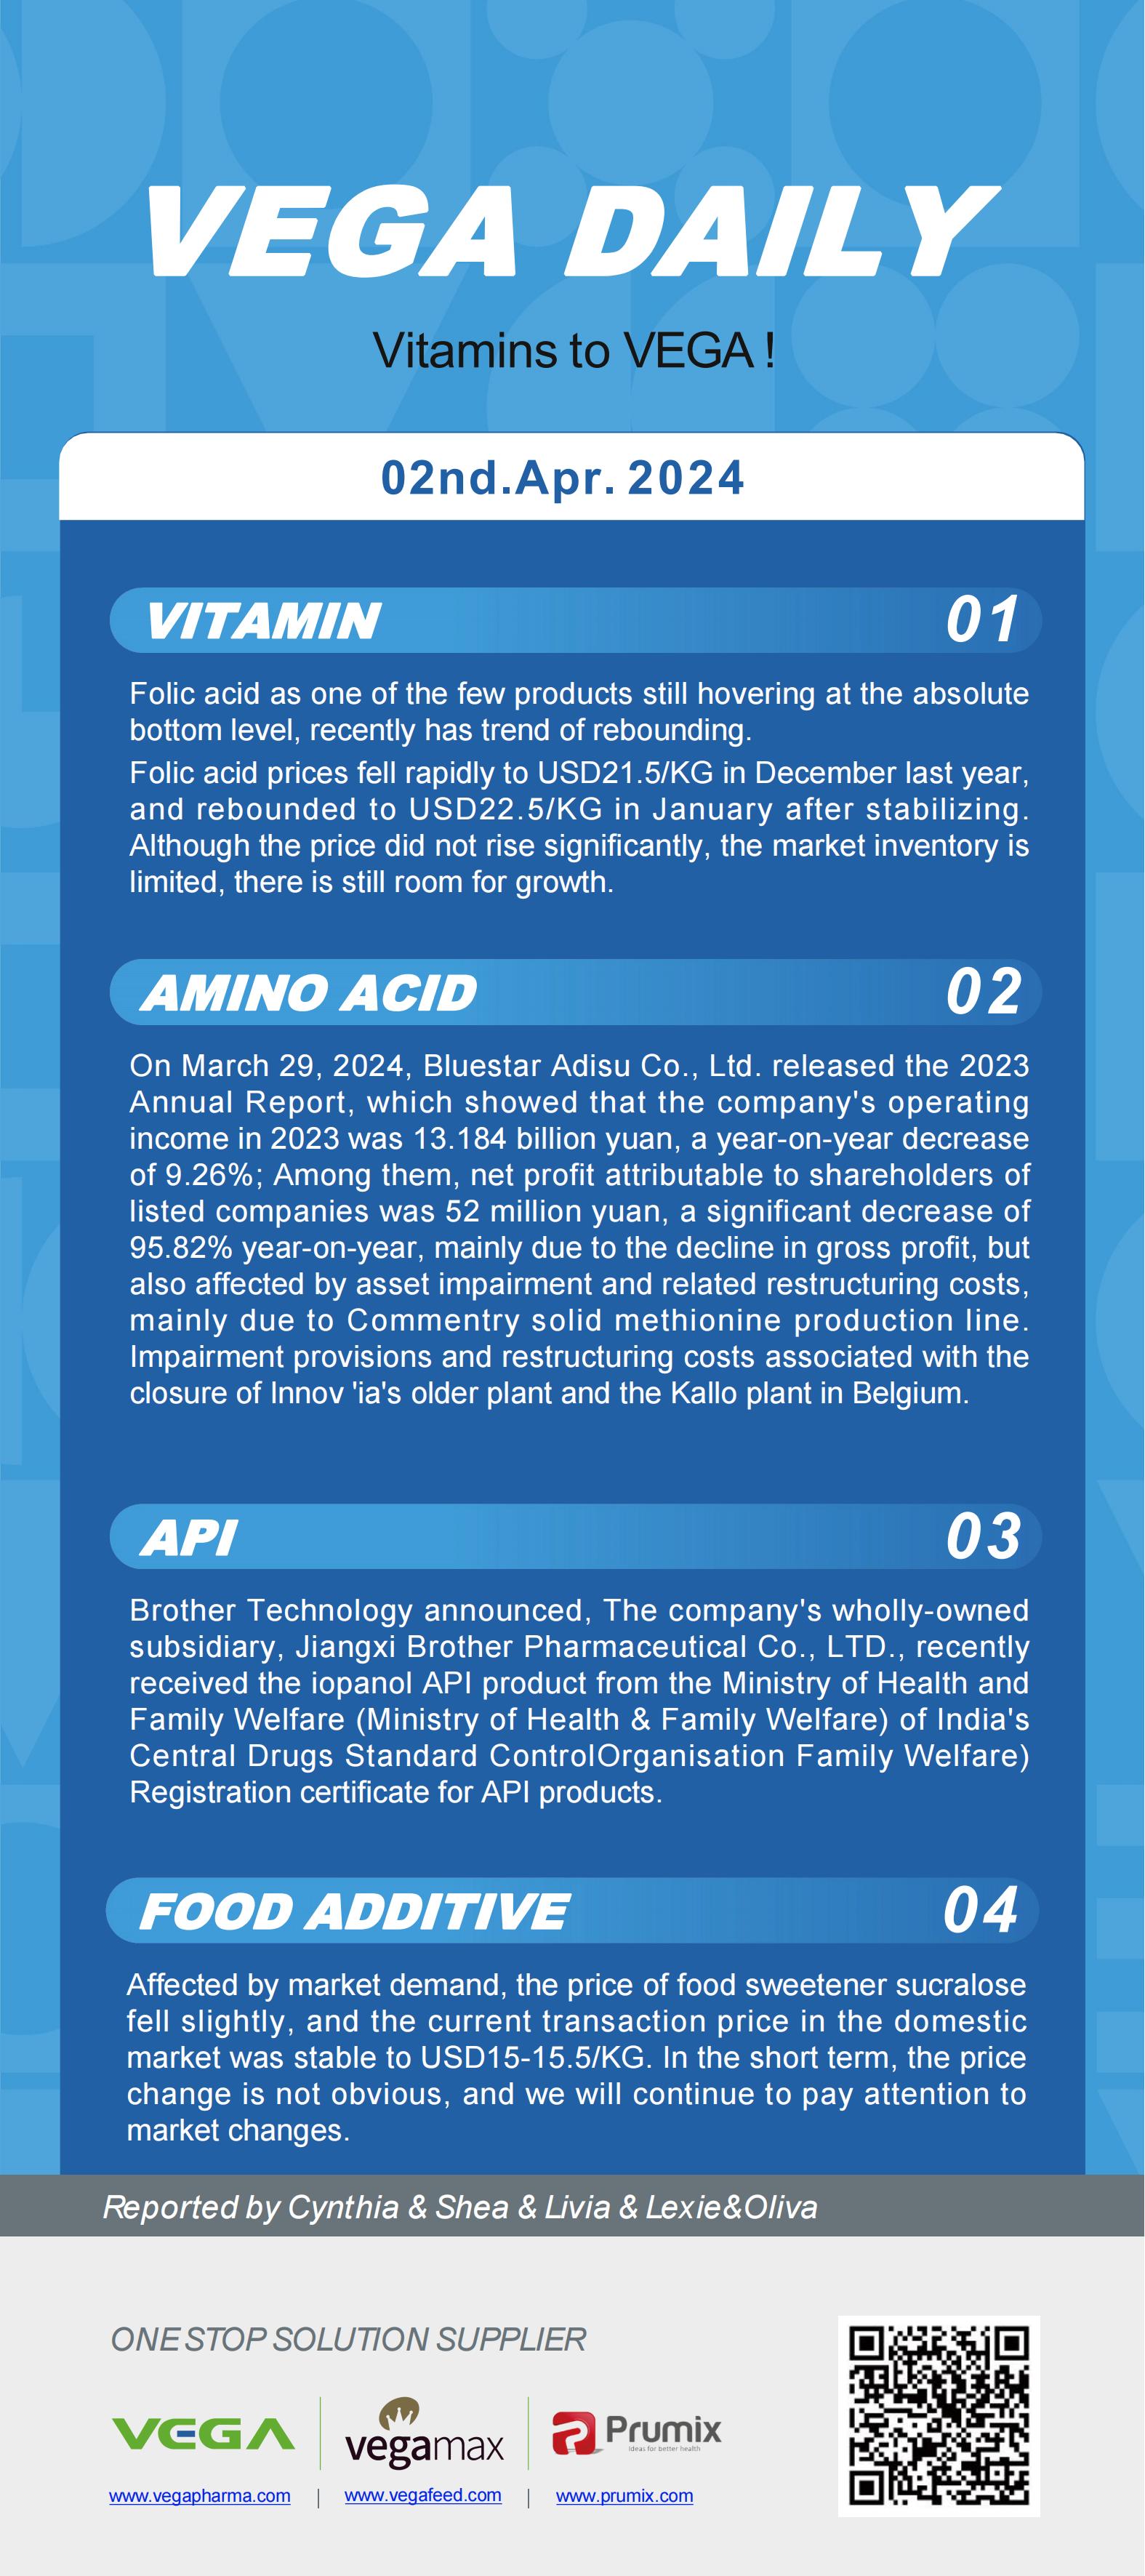 Vega Daily Dated on Apr 2nd 2024 Vitamin Amino Acid APl Food Additives.jpg